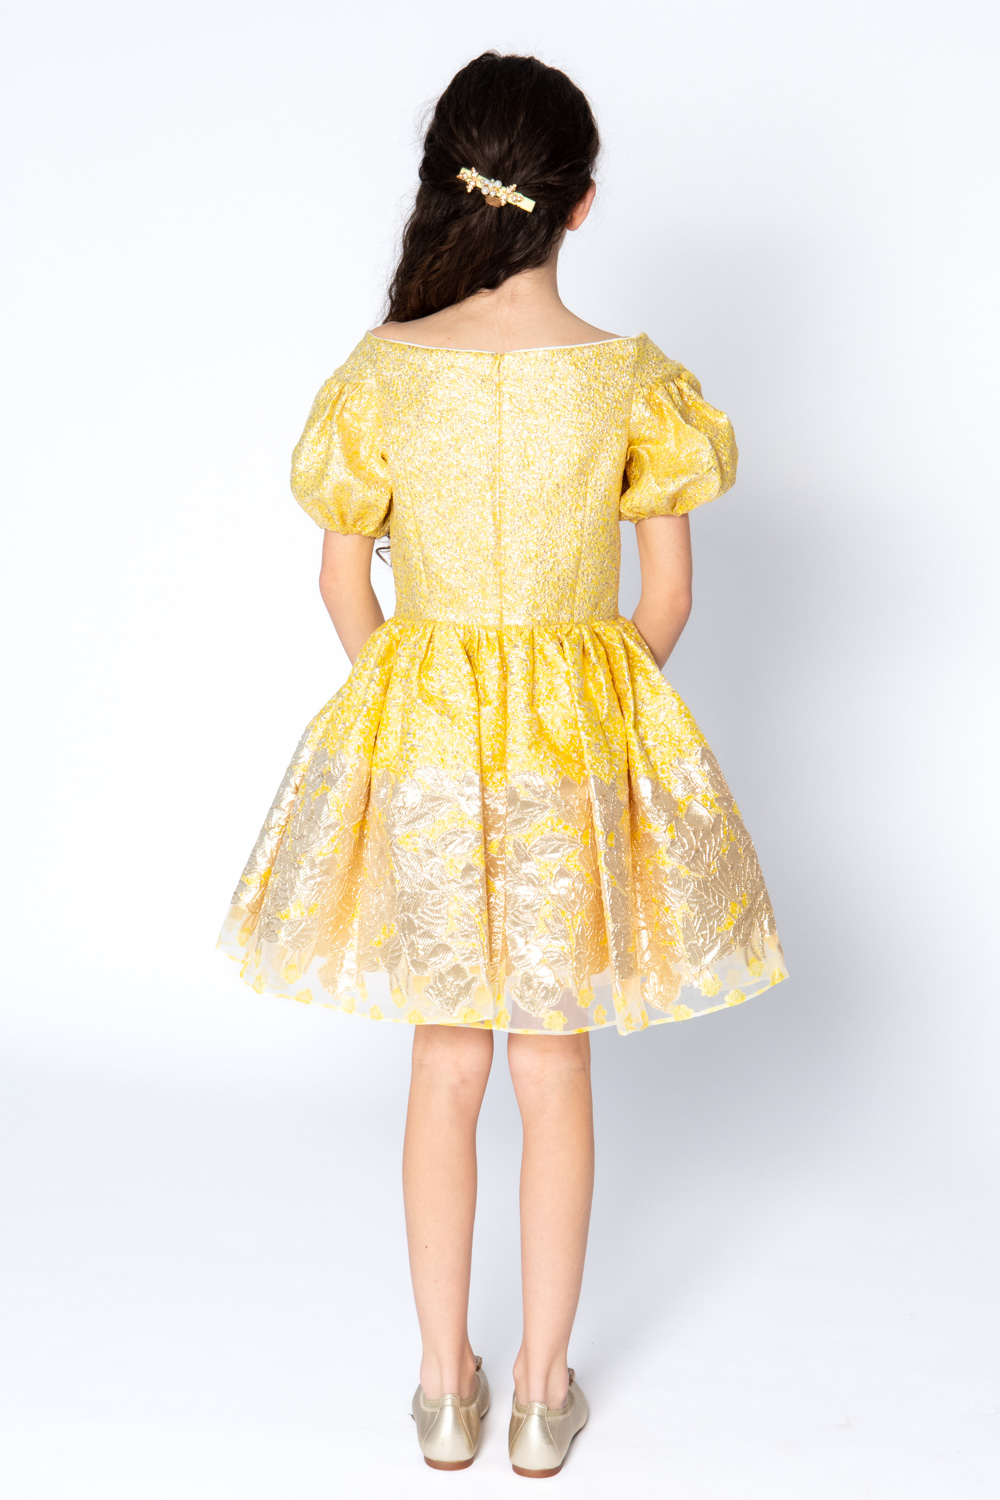 Canary Yellow Bridesmaid dress size 8 | eBay